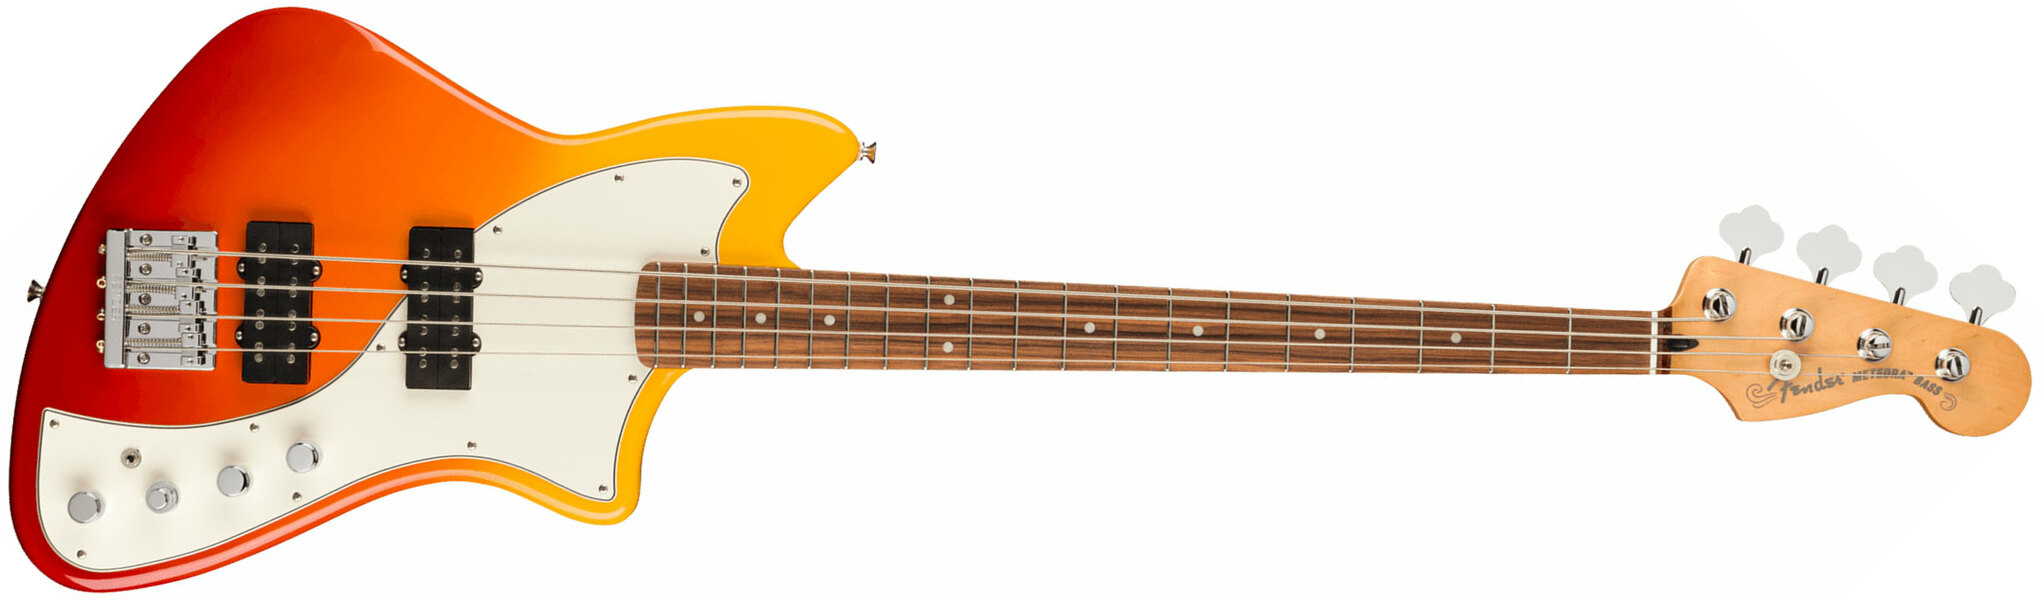 Fender Meteora Bass Active Player Plus Mex Pf - Tequila Sunrise - Solid body elektrische bas - Main picture